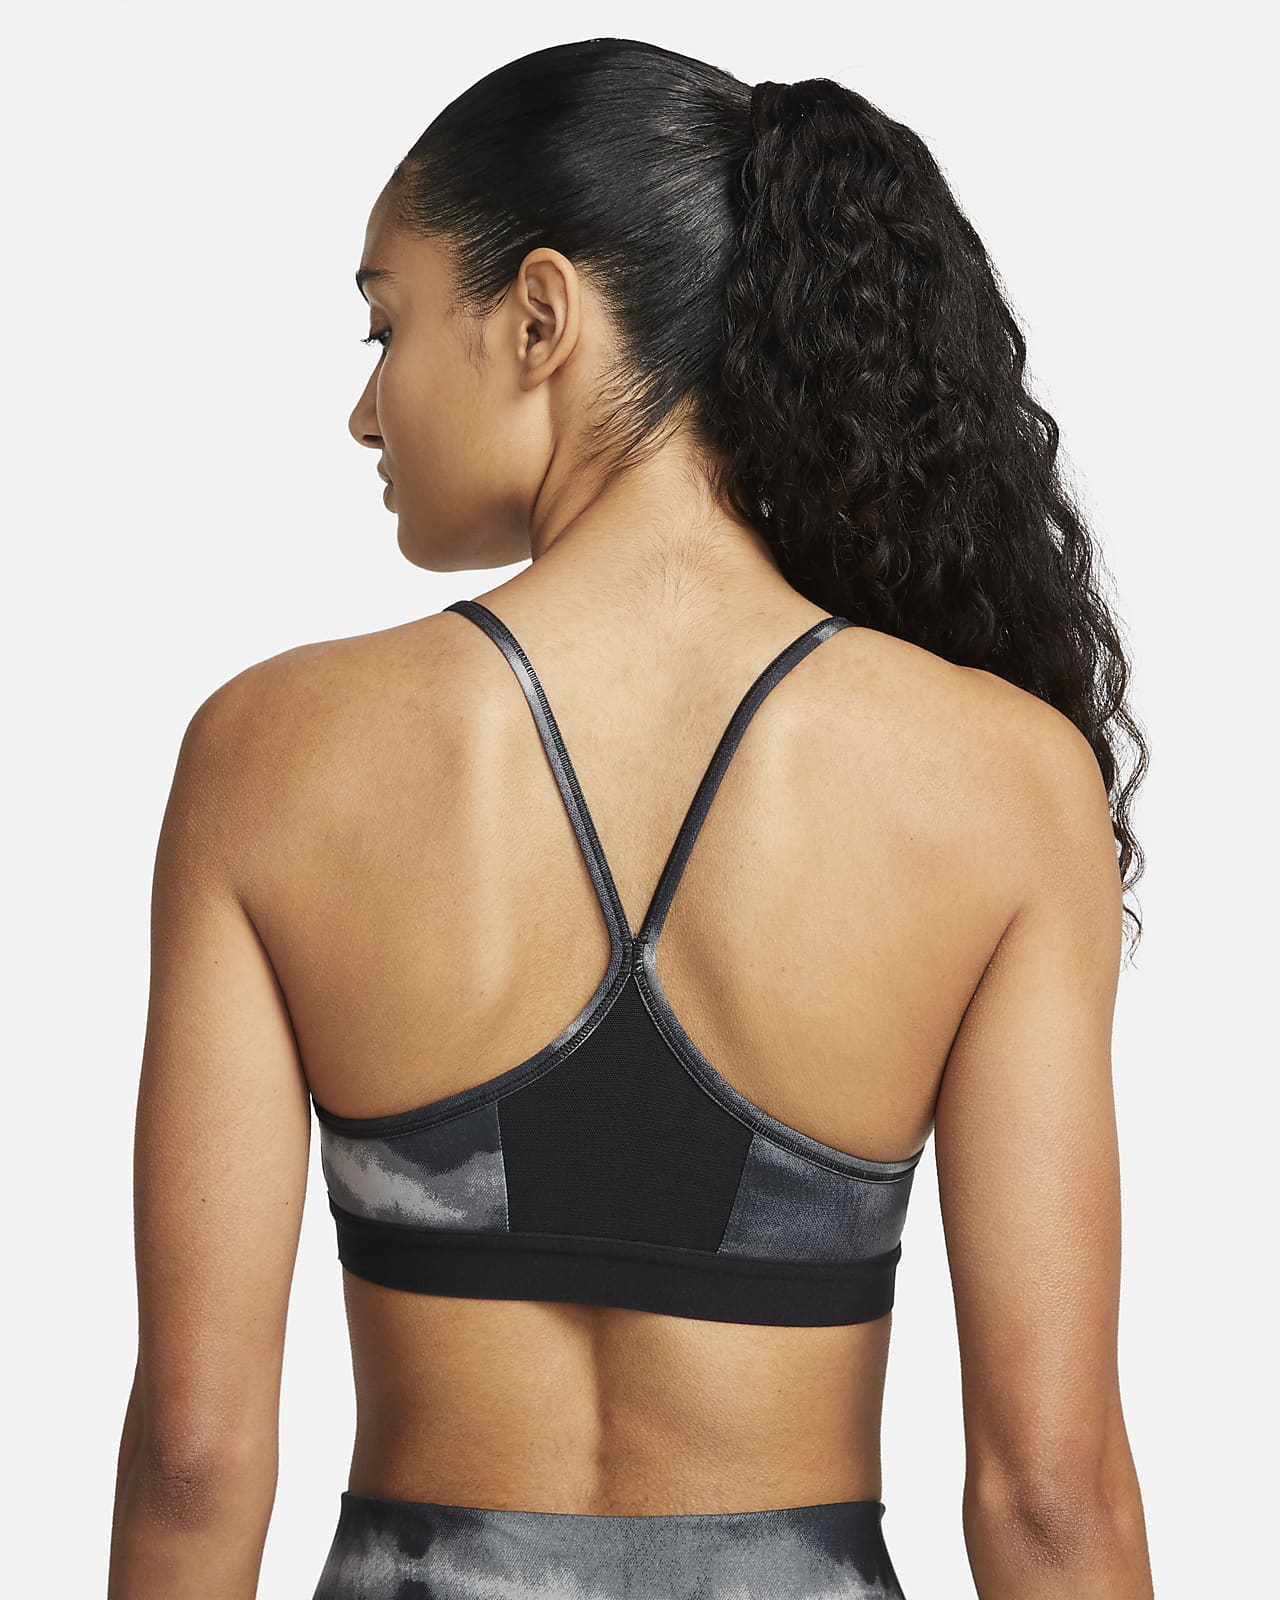 Nike Training Ultrabreathe Indy light support sports bra in black -  ShopStyle